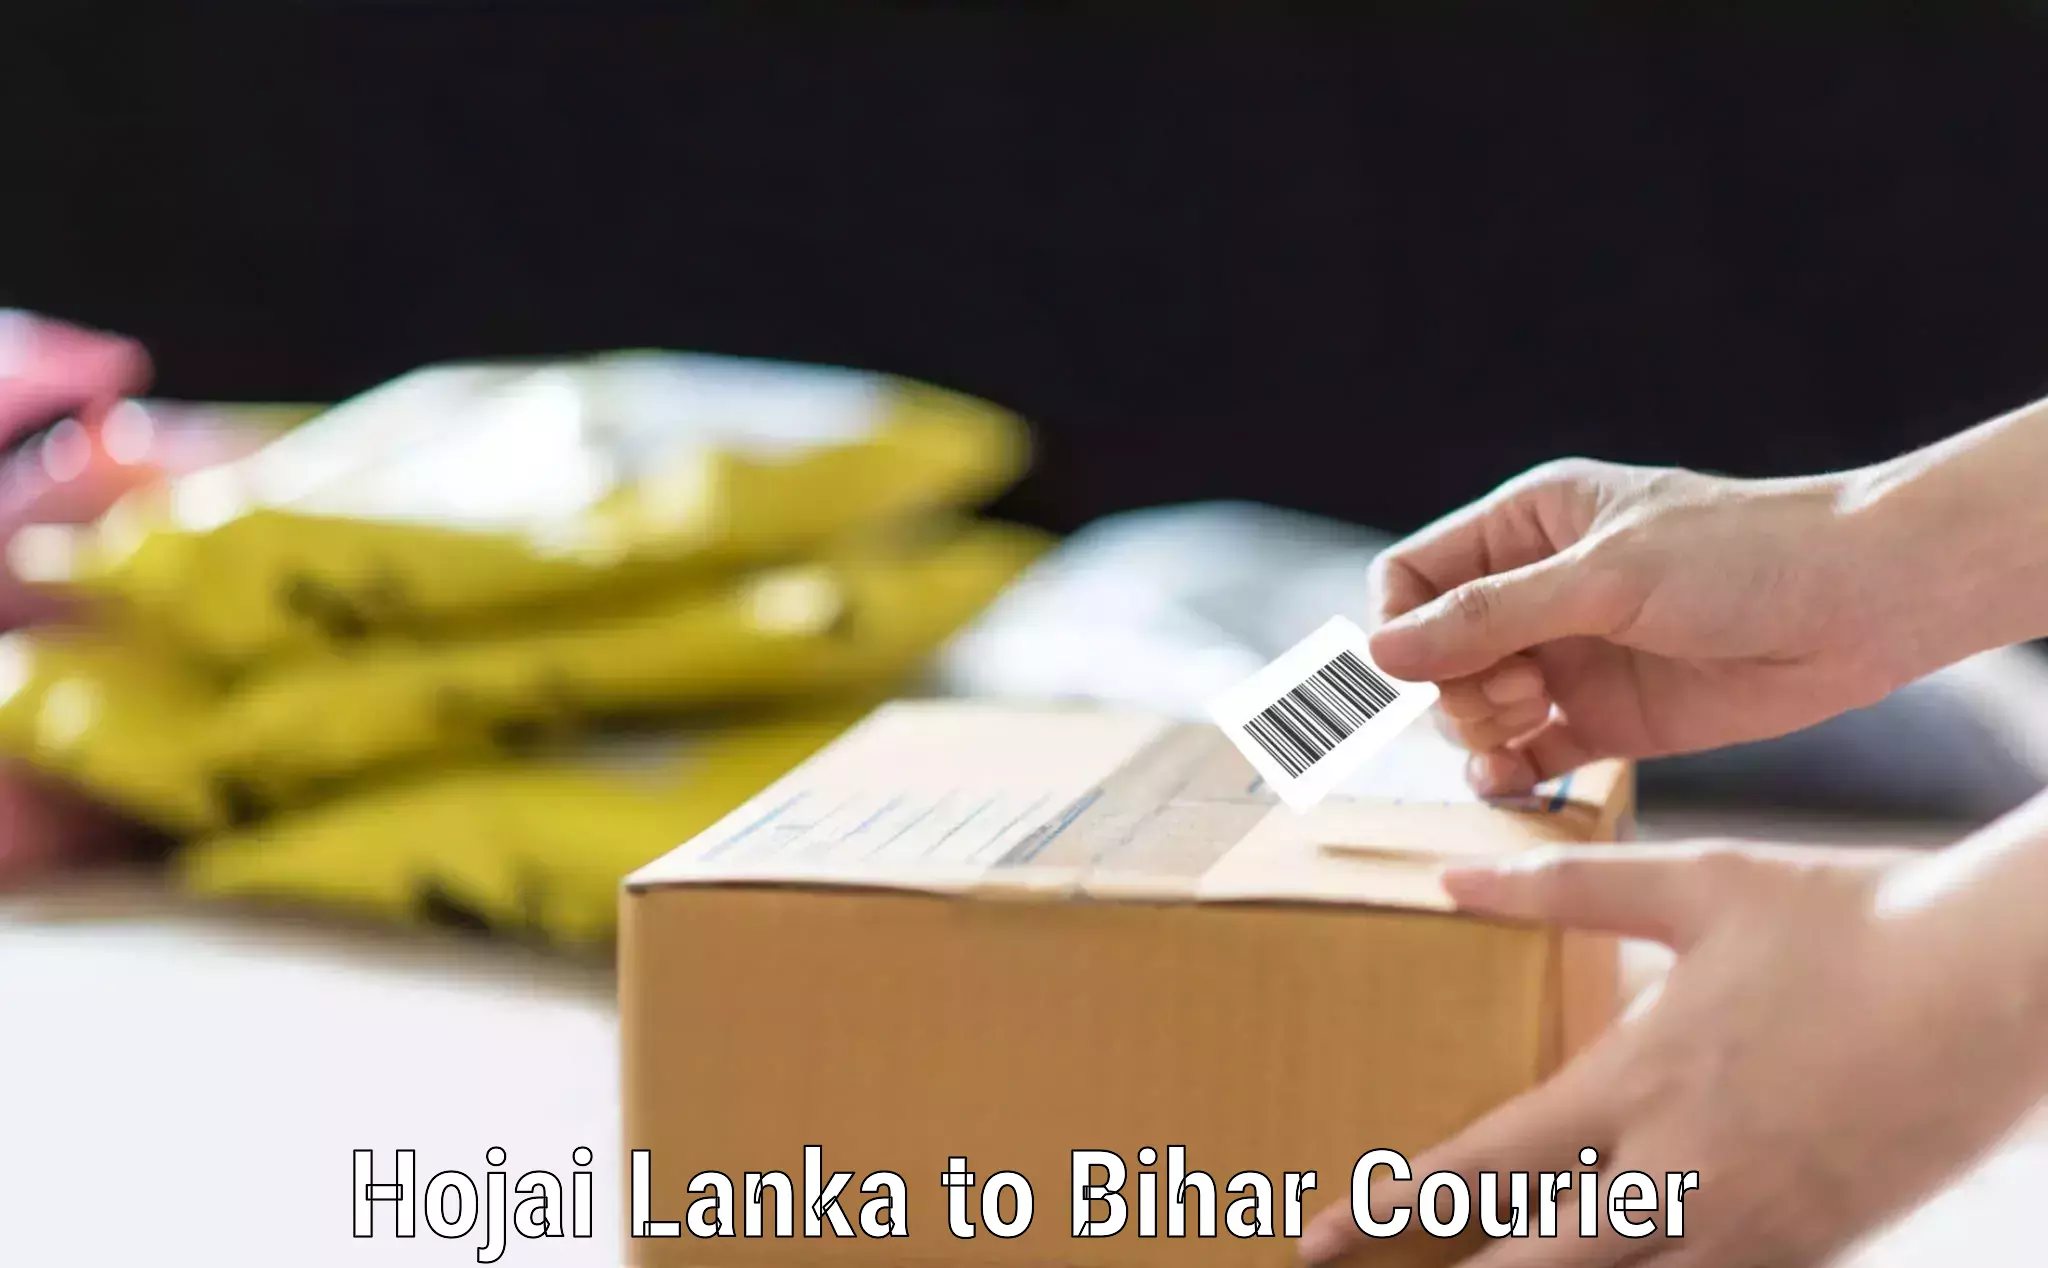 Hassle-free luggage shipping Hojai Lanka to Bihar